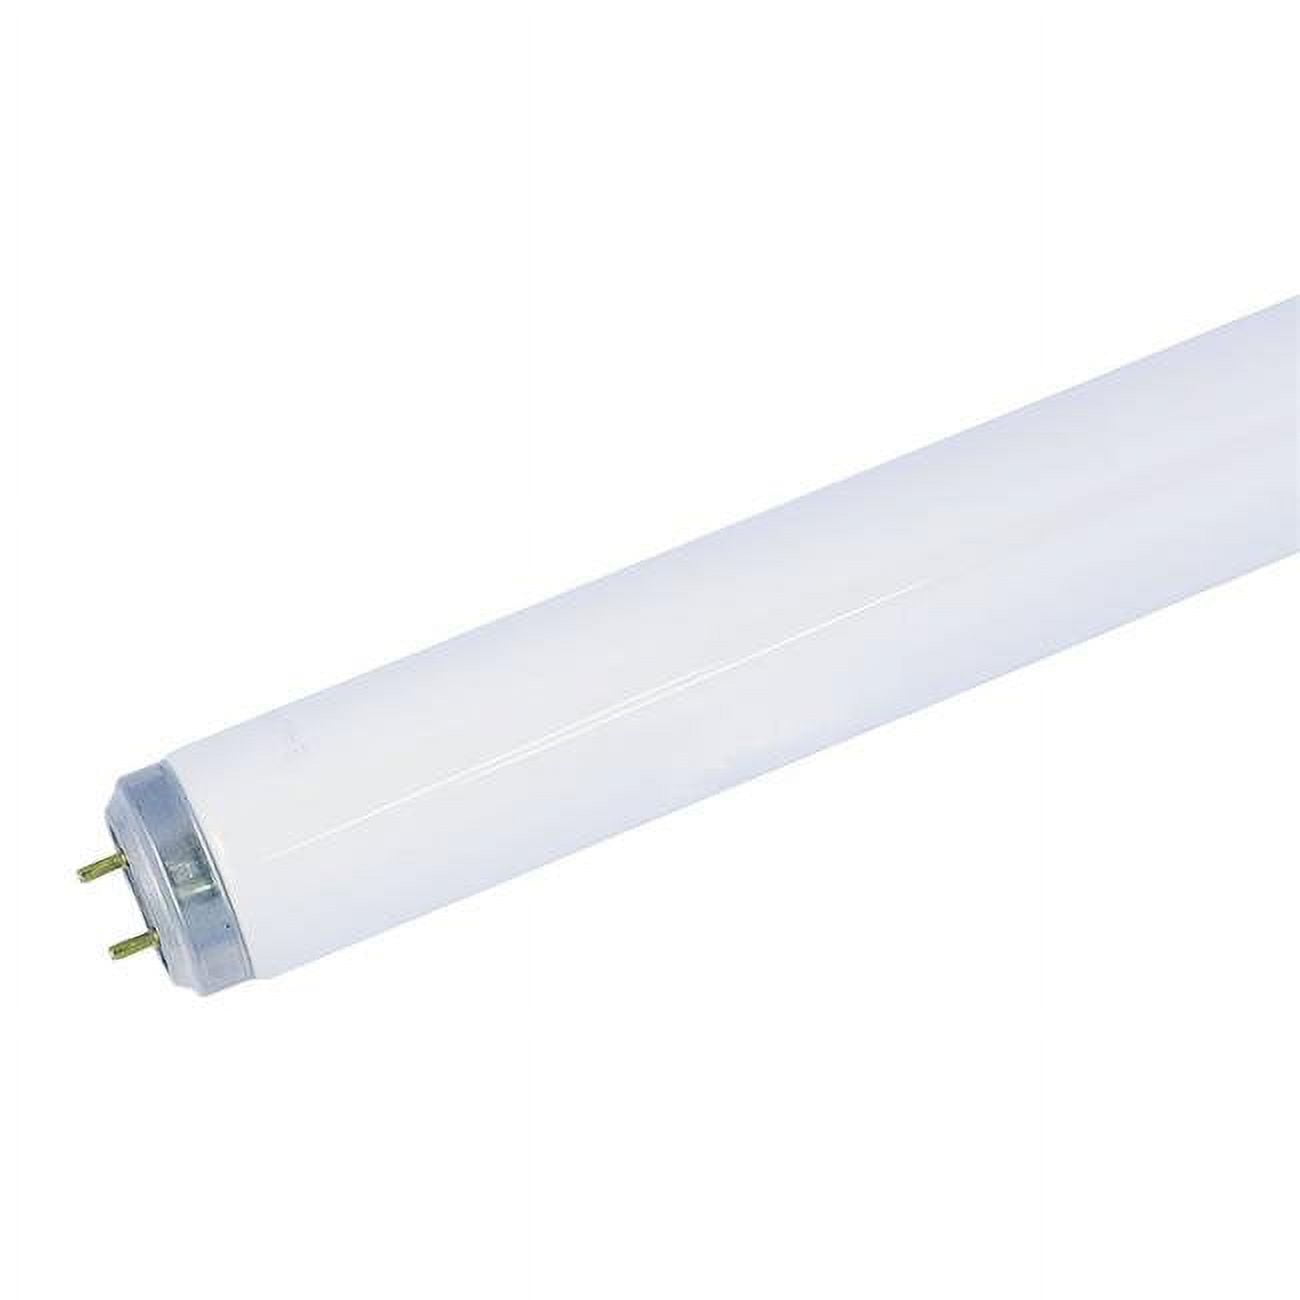 Dny-170238 Flexo Print Tl 80w-10-r Fluorescent Light Bulb